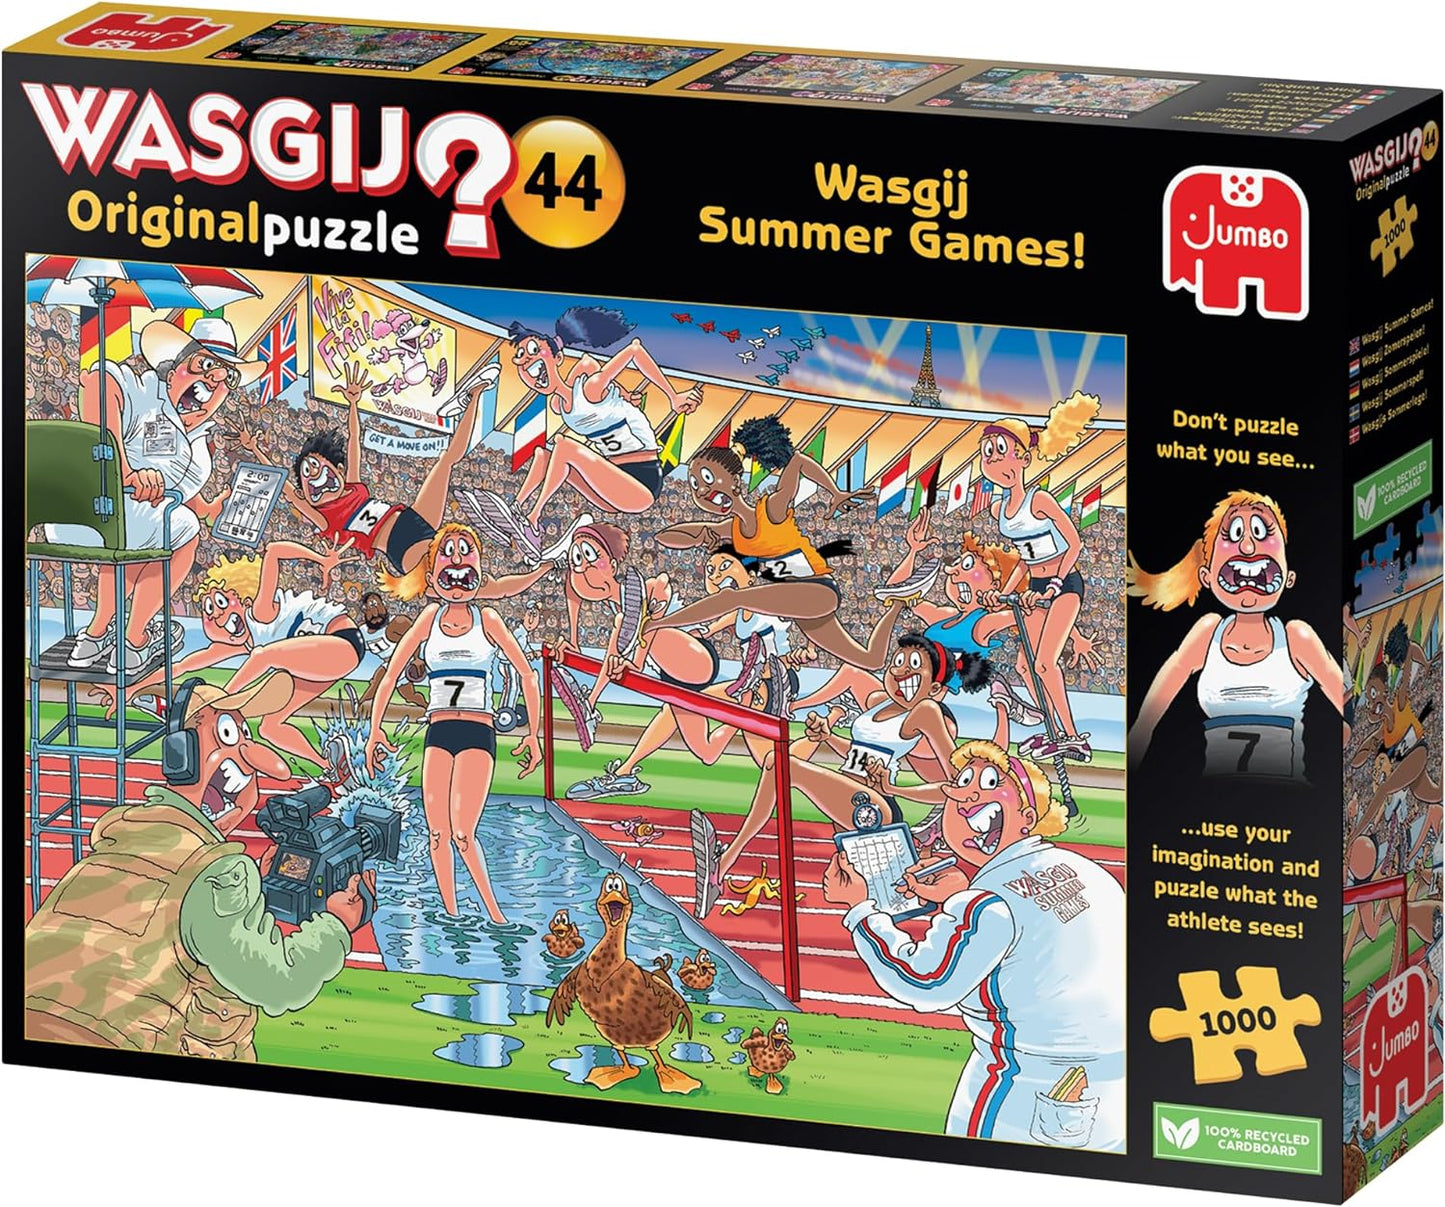 Wasgij - Original 44 Wasgij Summer Games! - 1000 Piece Jigsaw Puzzle